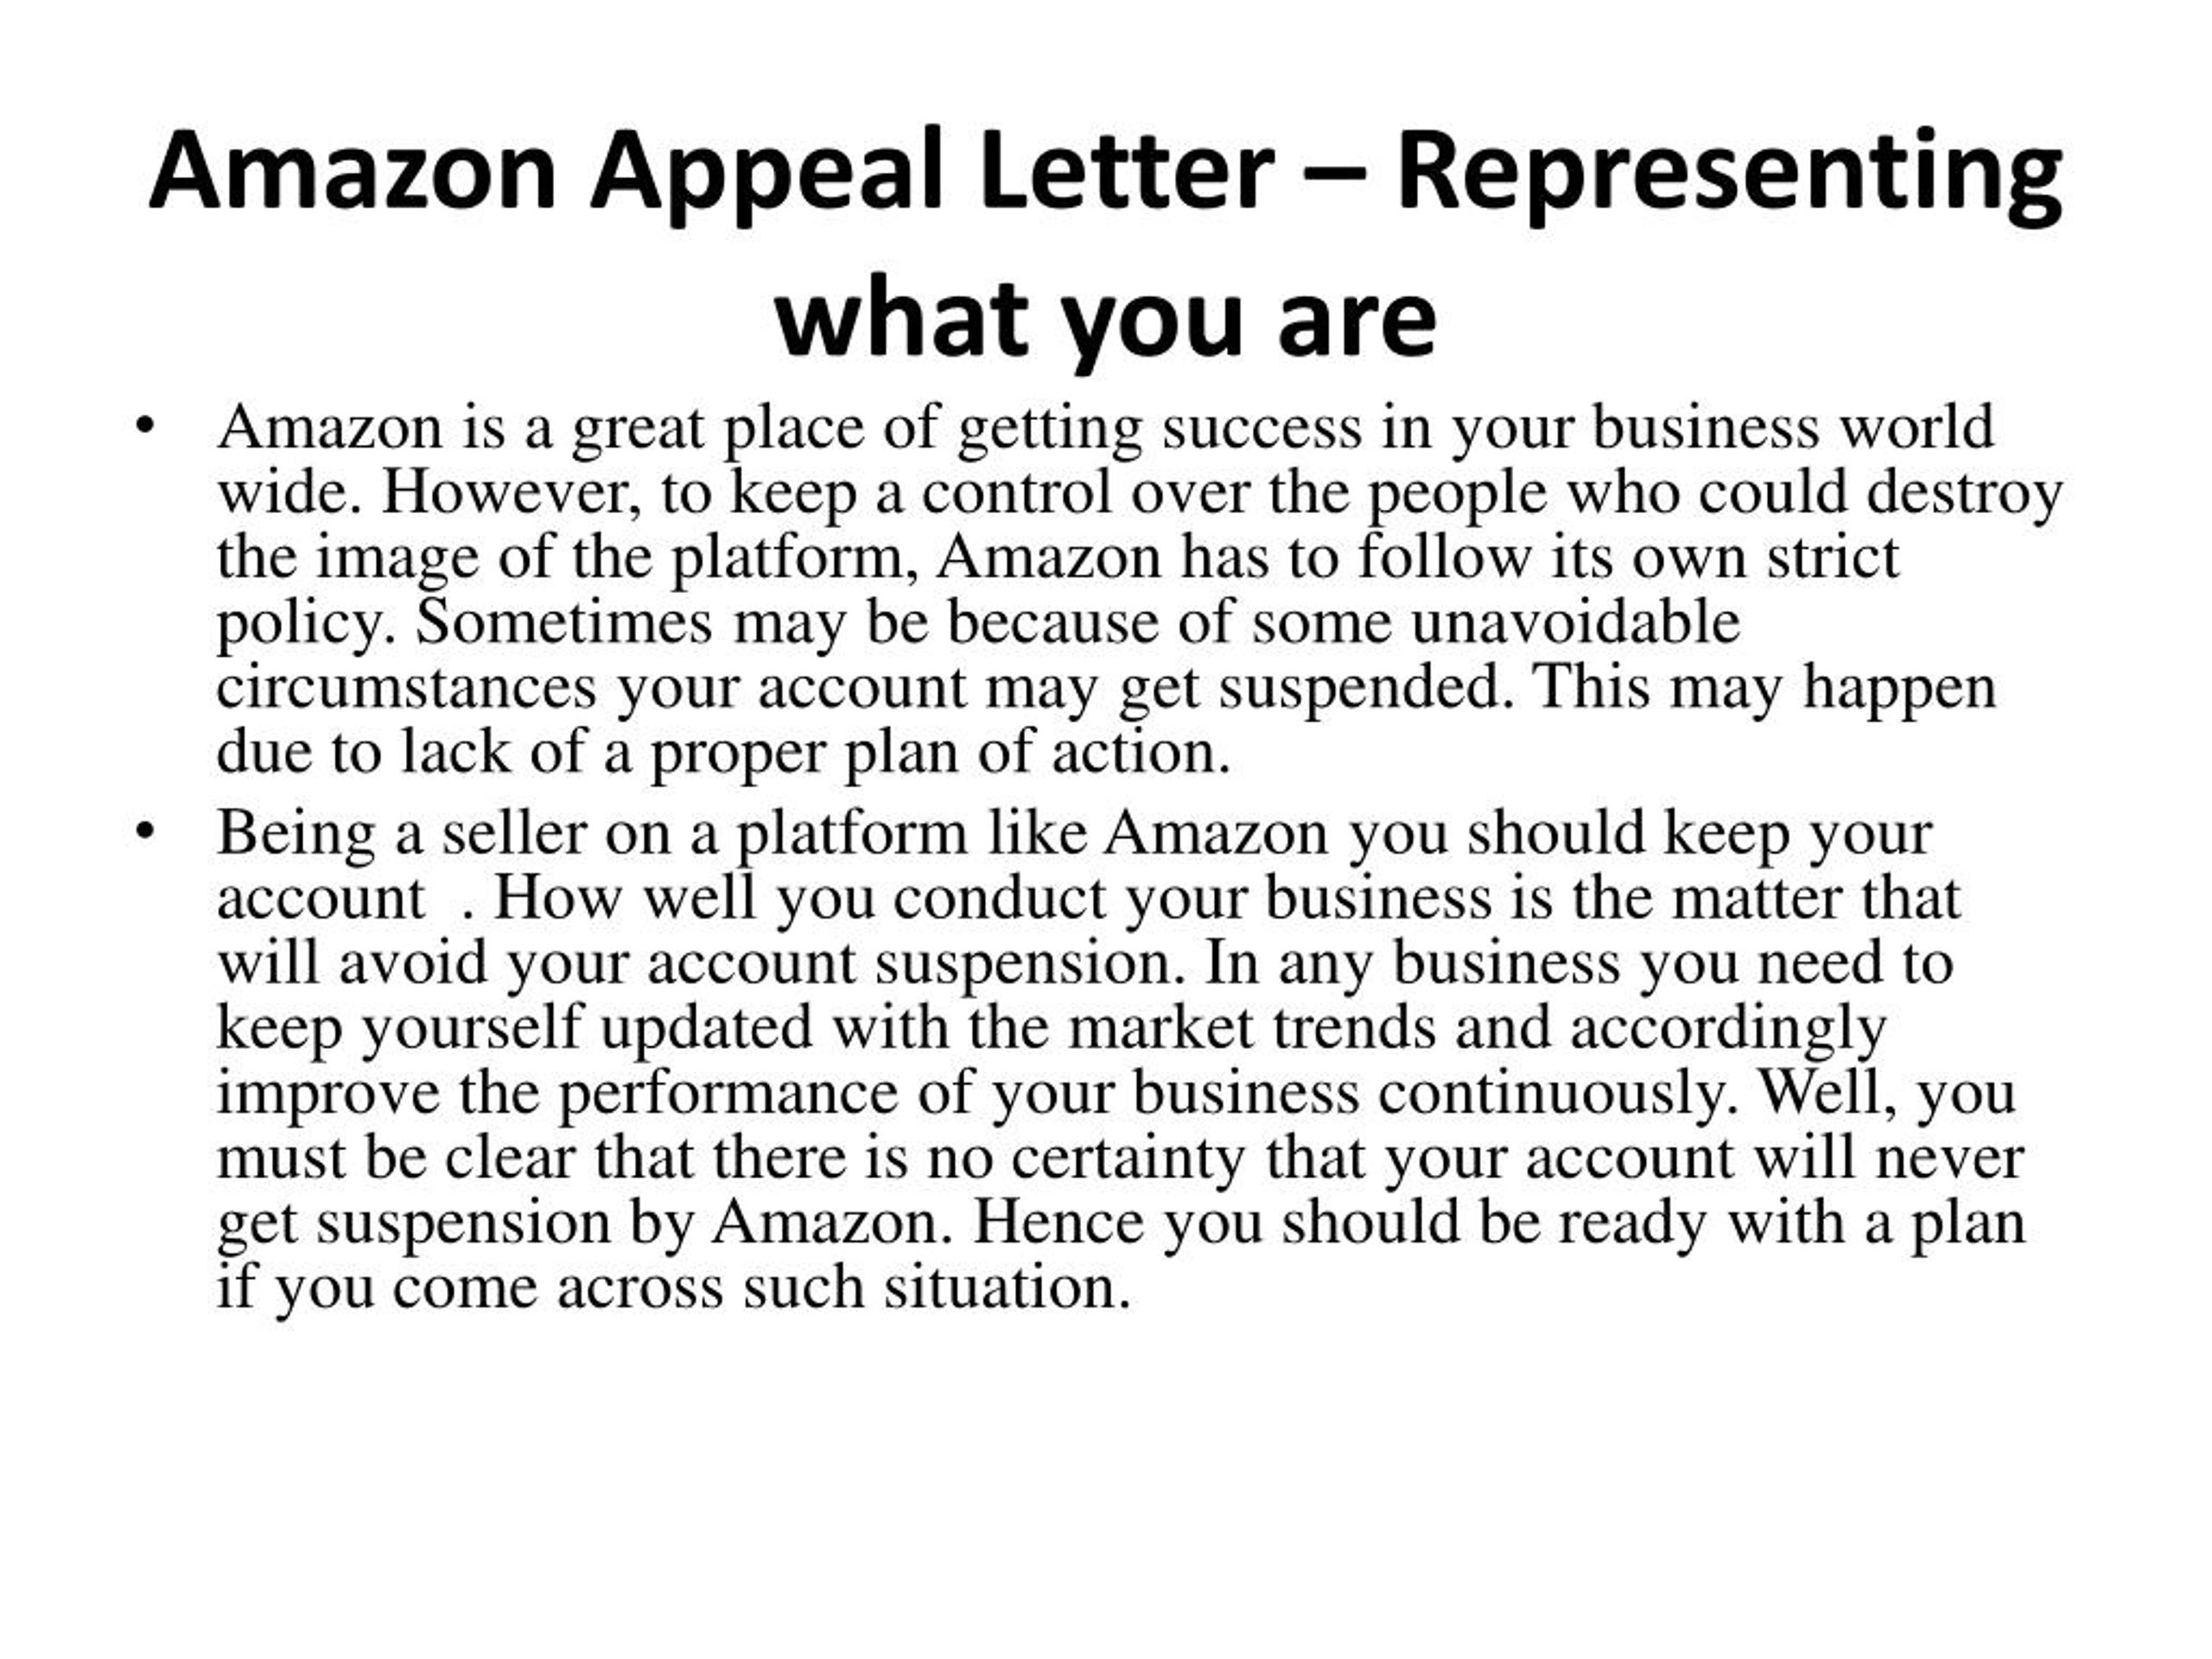 PPT Amazon Reinstatement Letter 18444444171 PowerPoint